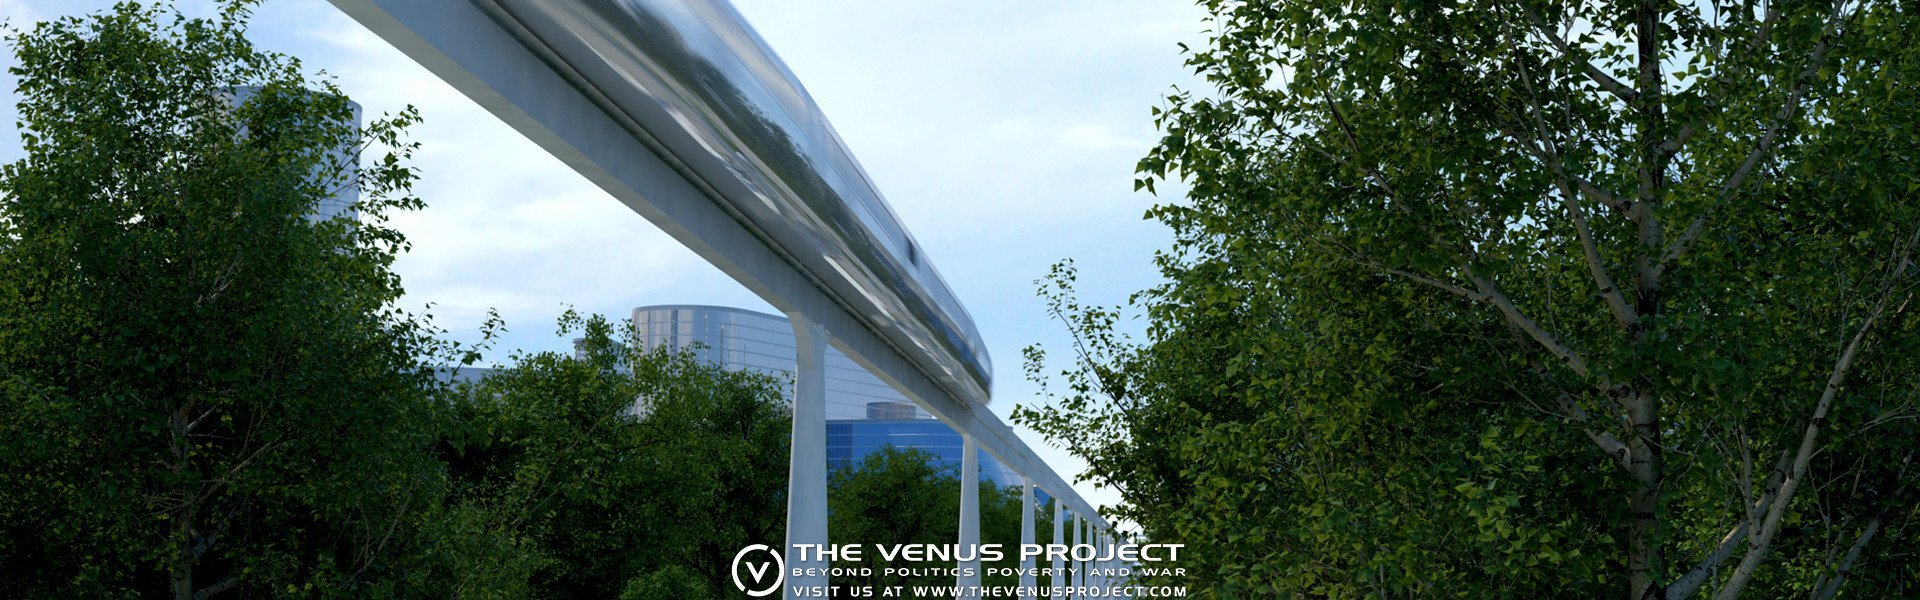 www.thevenusproject.com